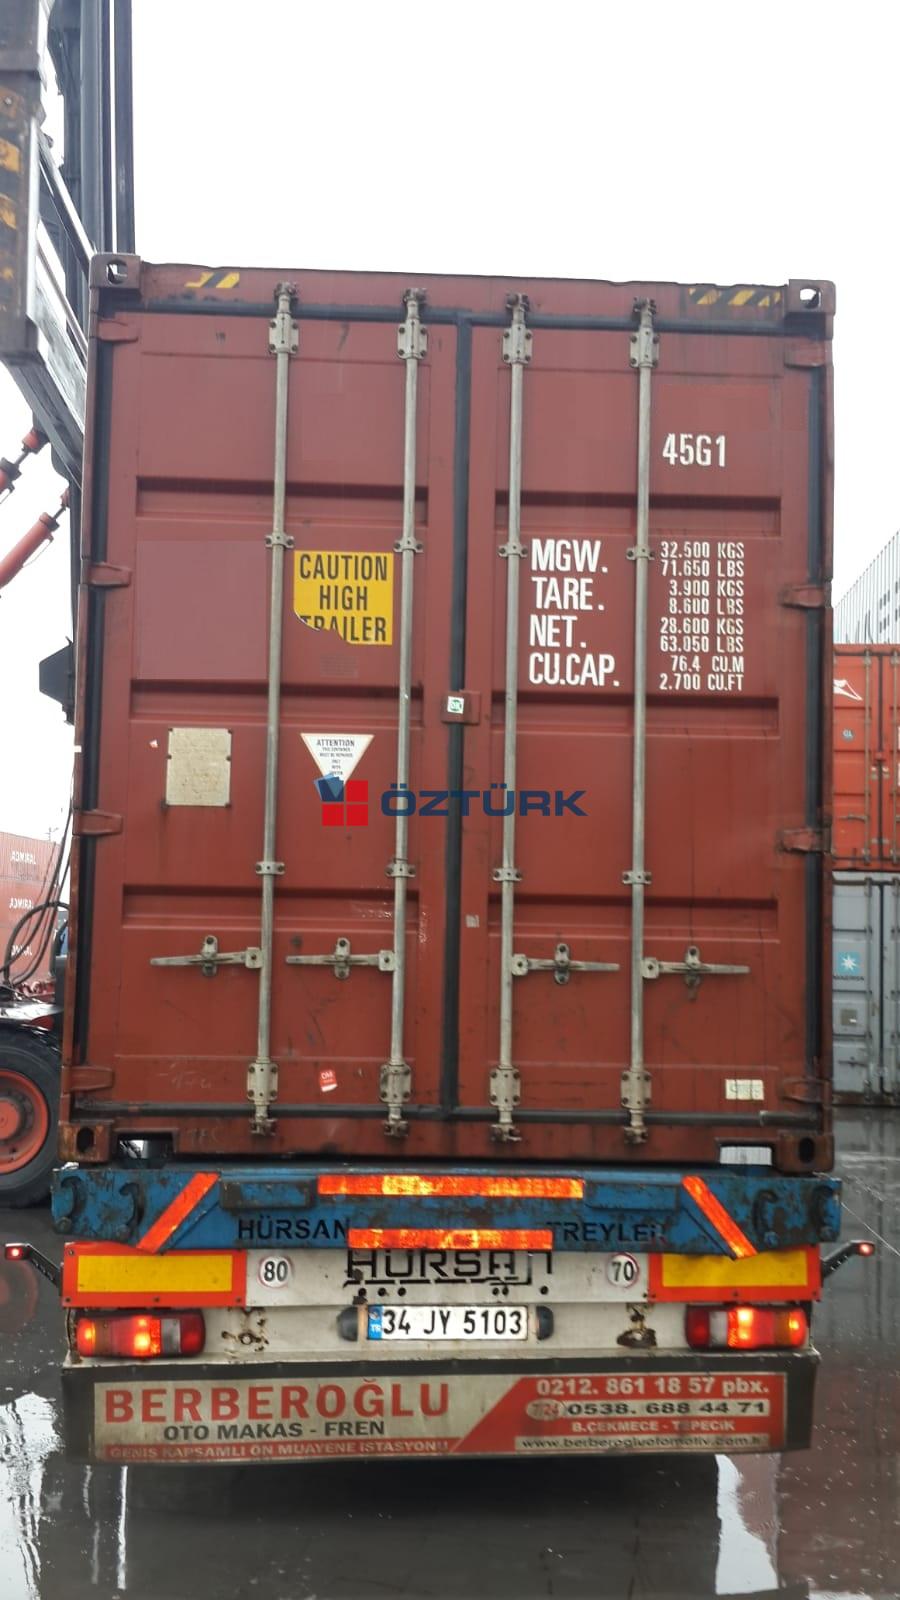 2.el 40 feet yk konteyner hasarsz ucuz depo konteynerleri